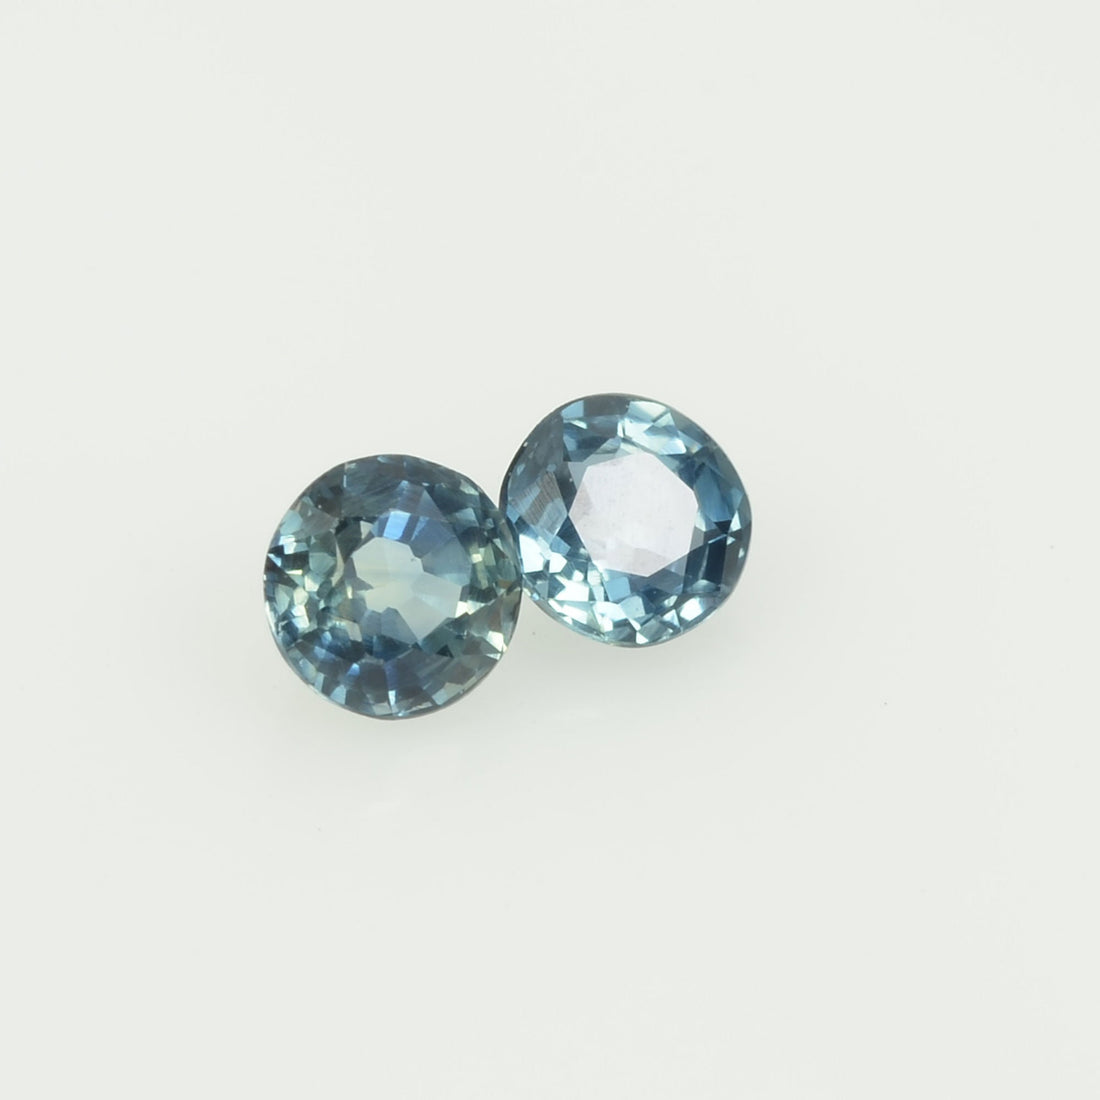 3.1 mm Natural Blue Sapphire Loose Gemstone Round Cut